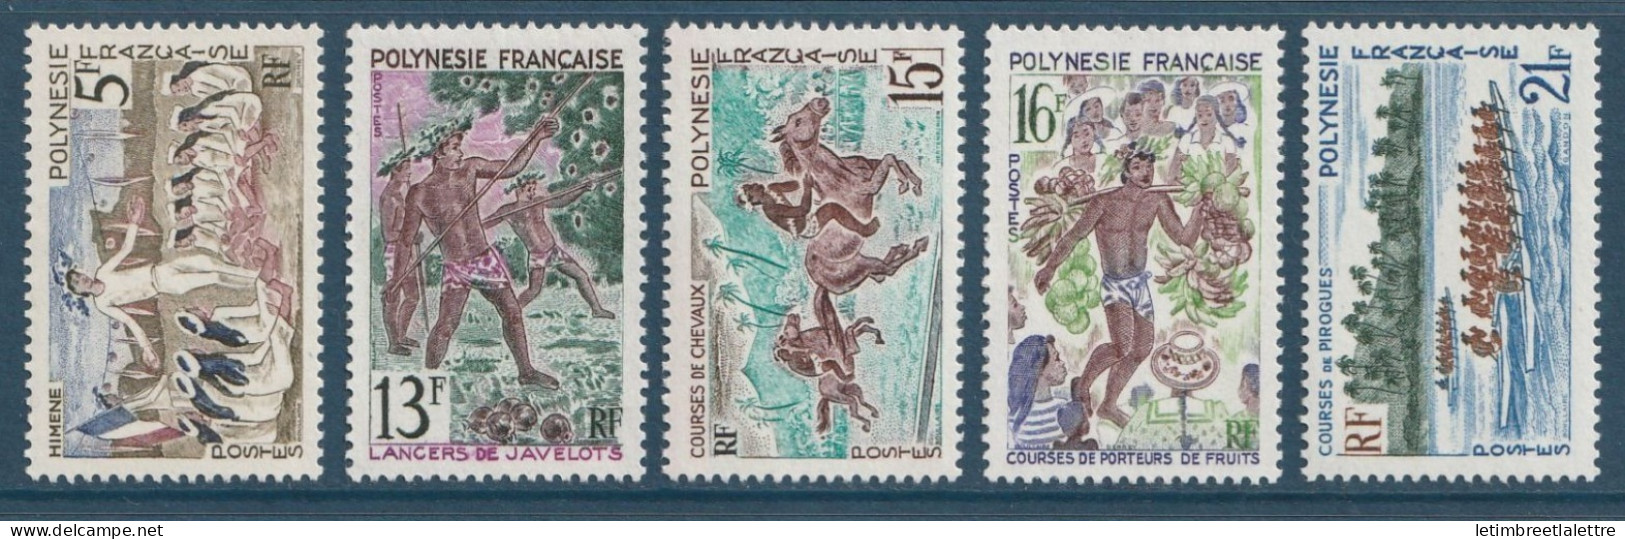 Polynésie - YT N° 47 à 51 ** - Neuf Sans Charnière - 1967 - Ungebraucht